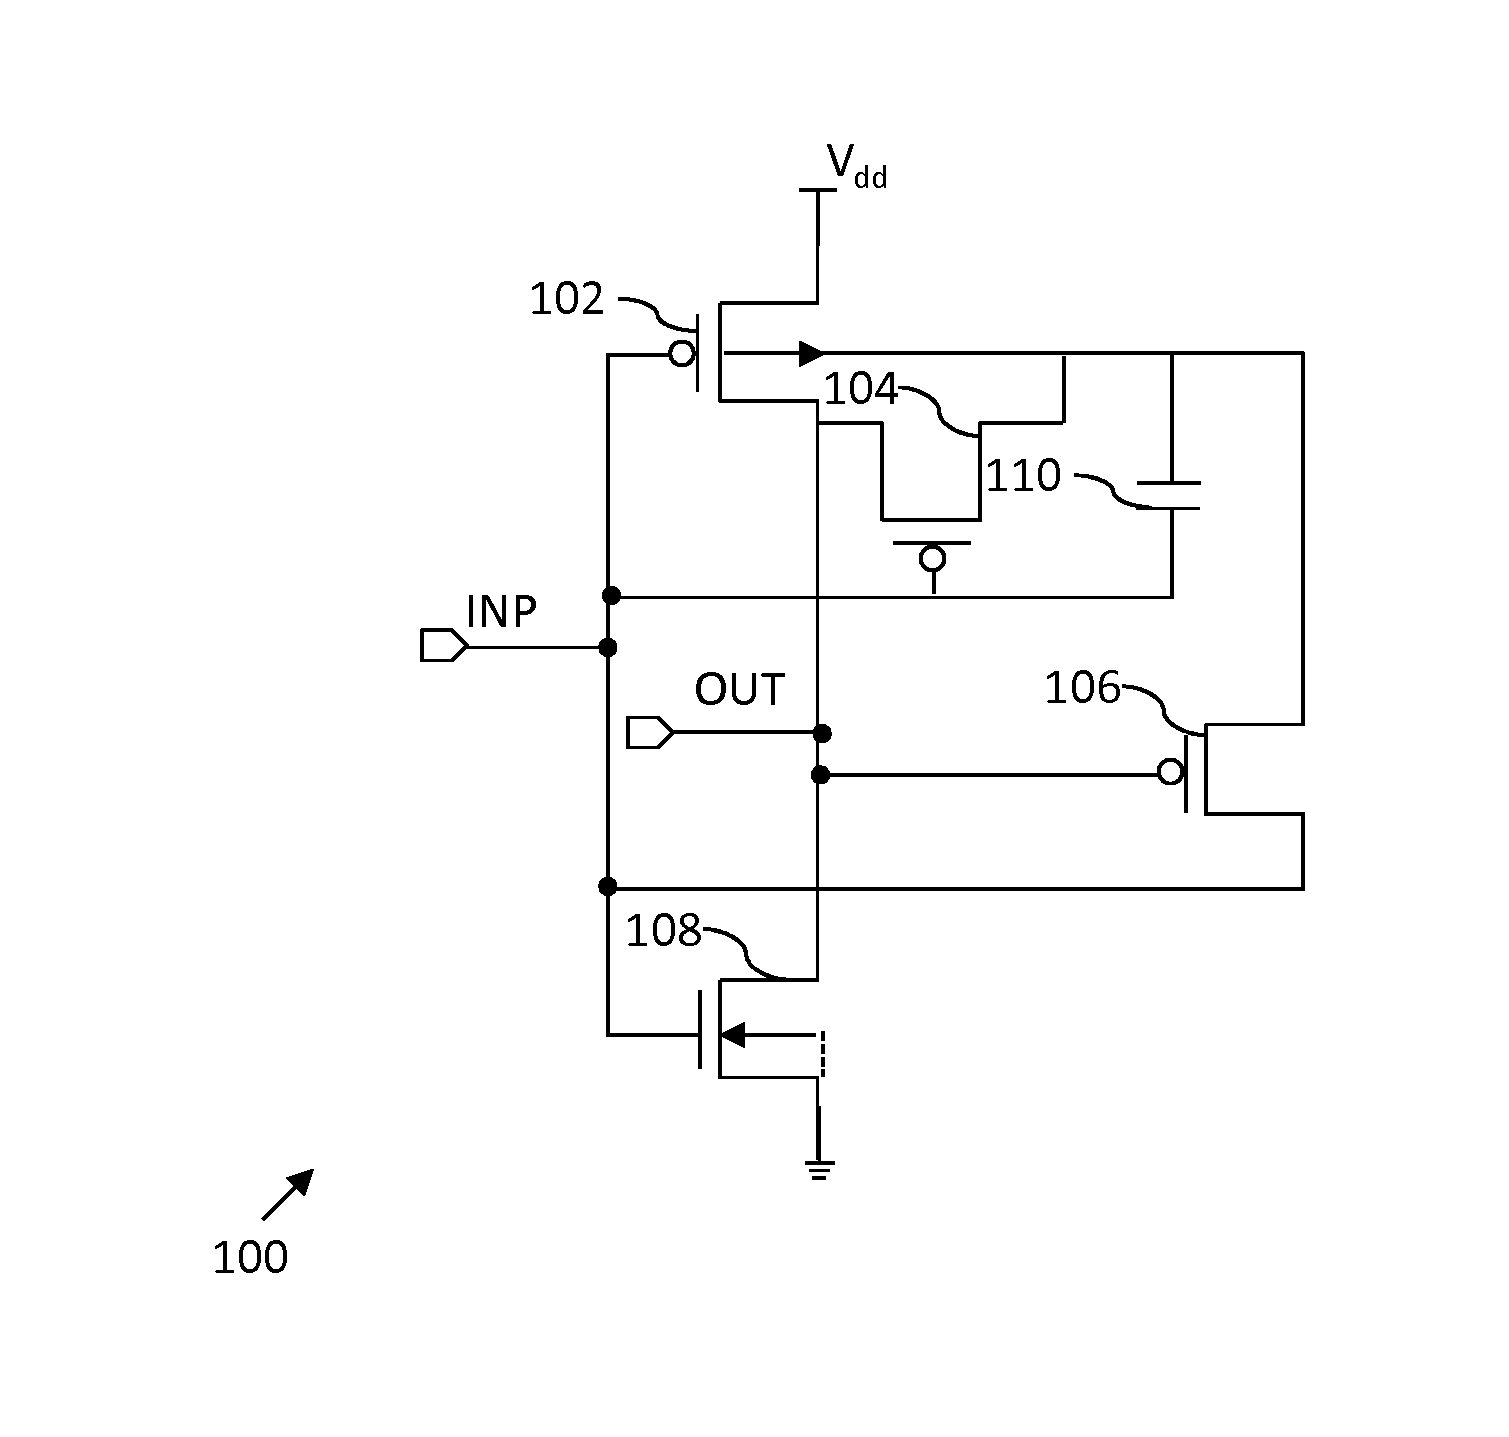 MOS transistor with forward bulk-biasing circuit